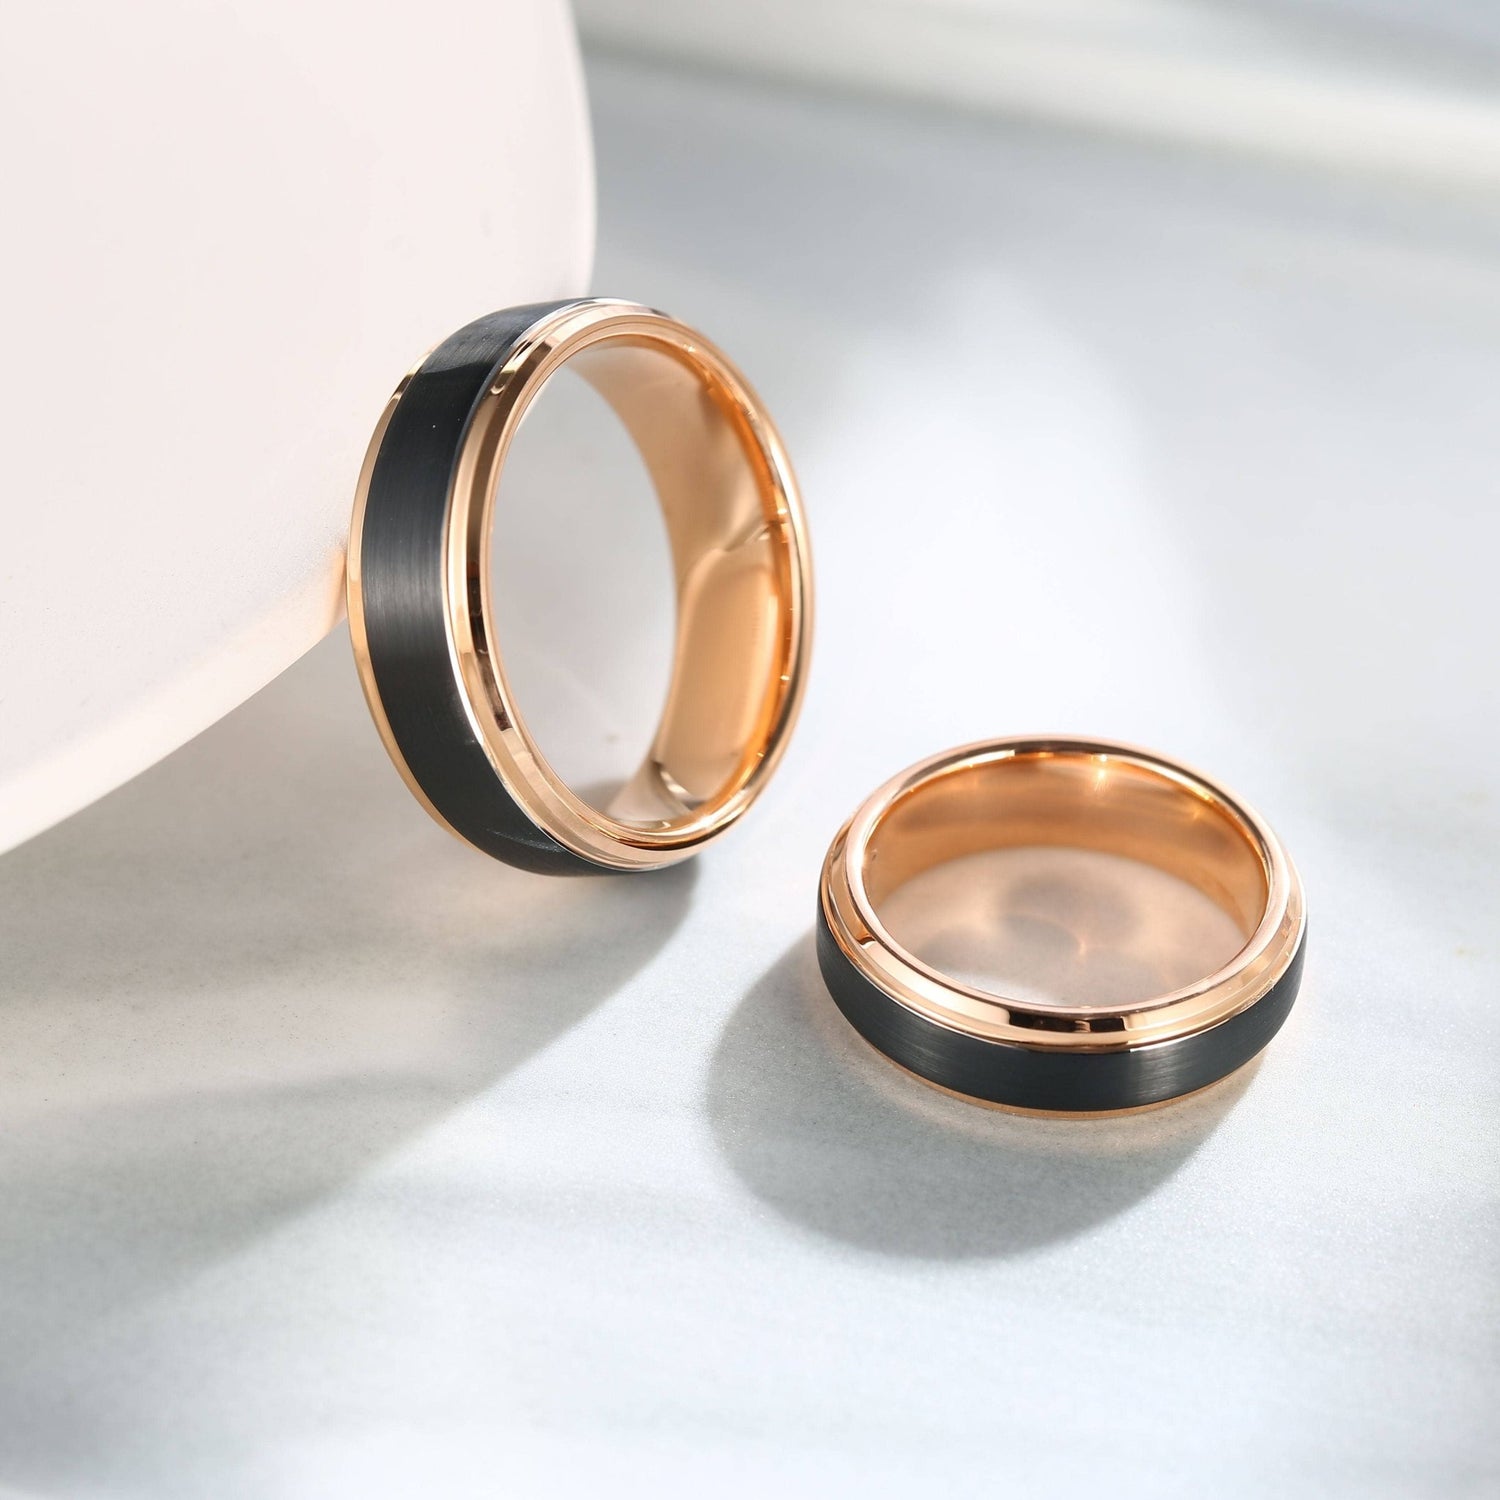 8mm Black and Rose Gold Tungsten Carbide Men's Wedding Ring - Black Diamonds New York